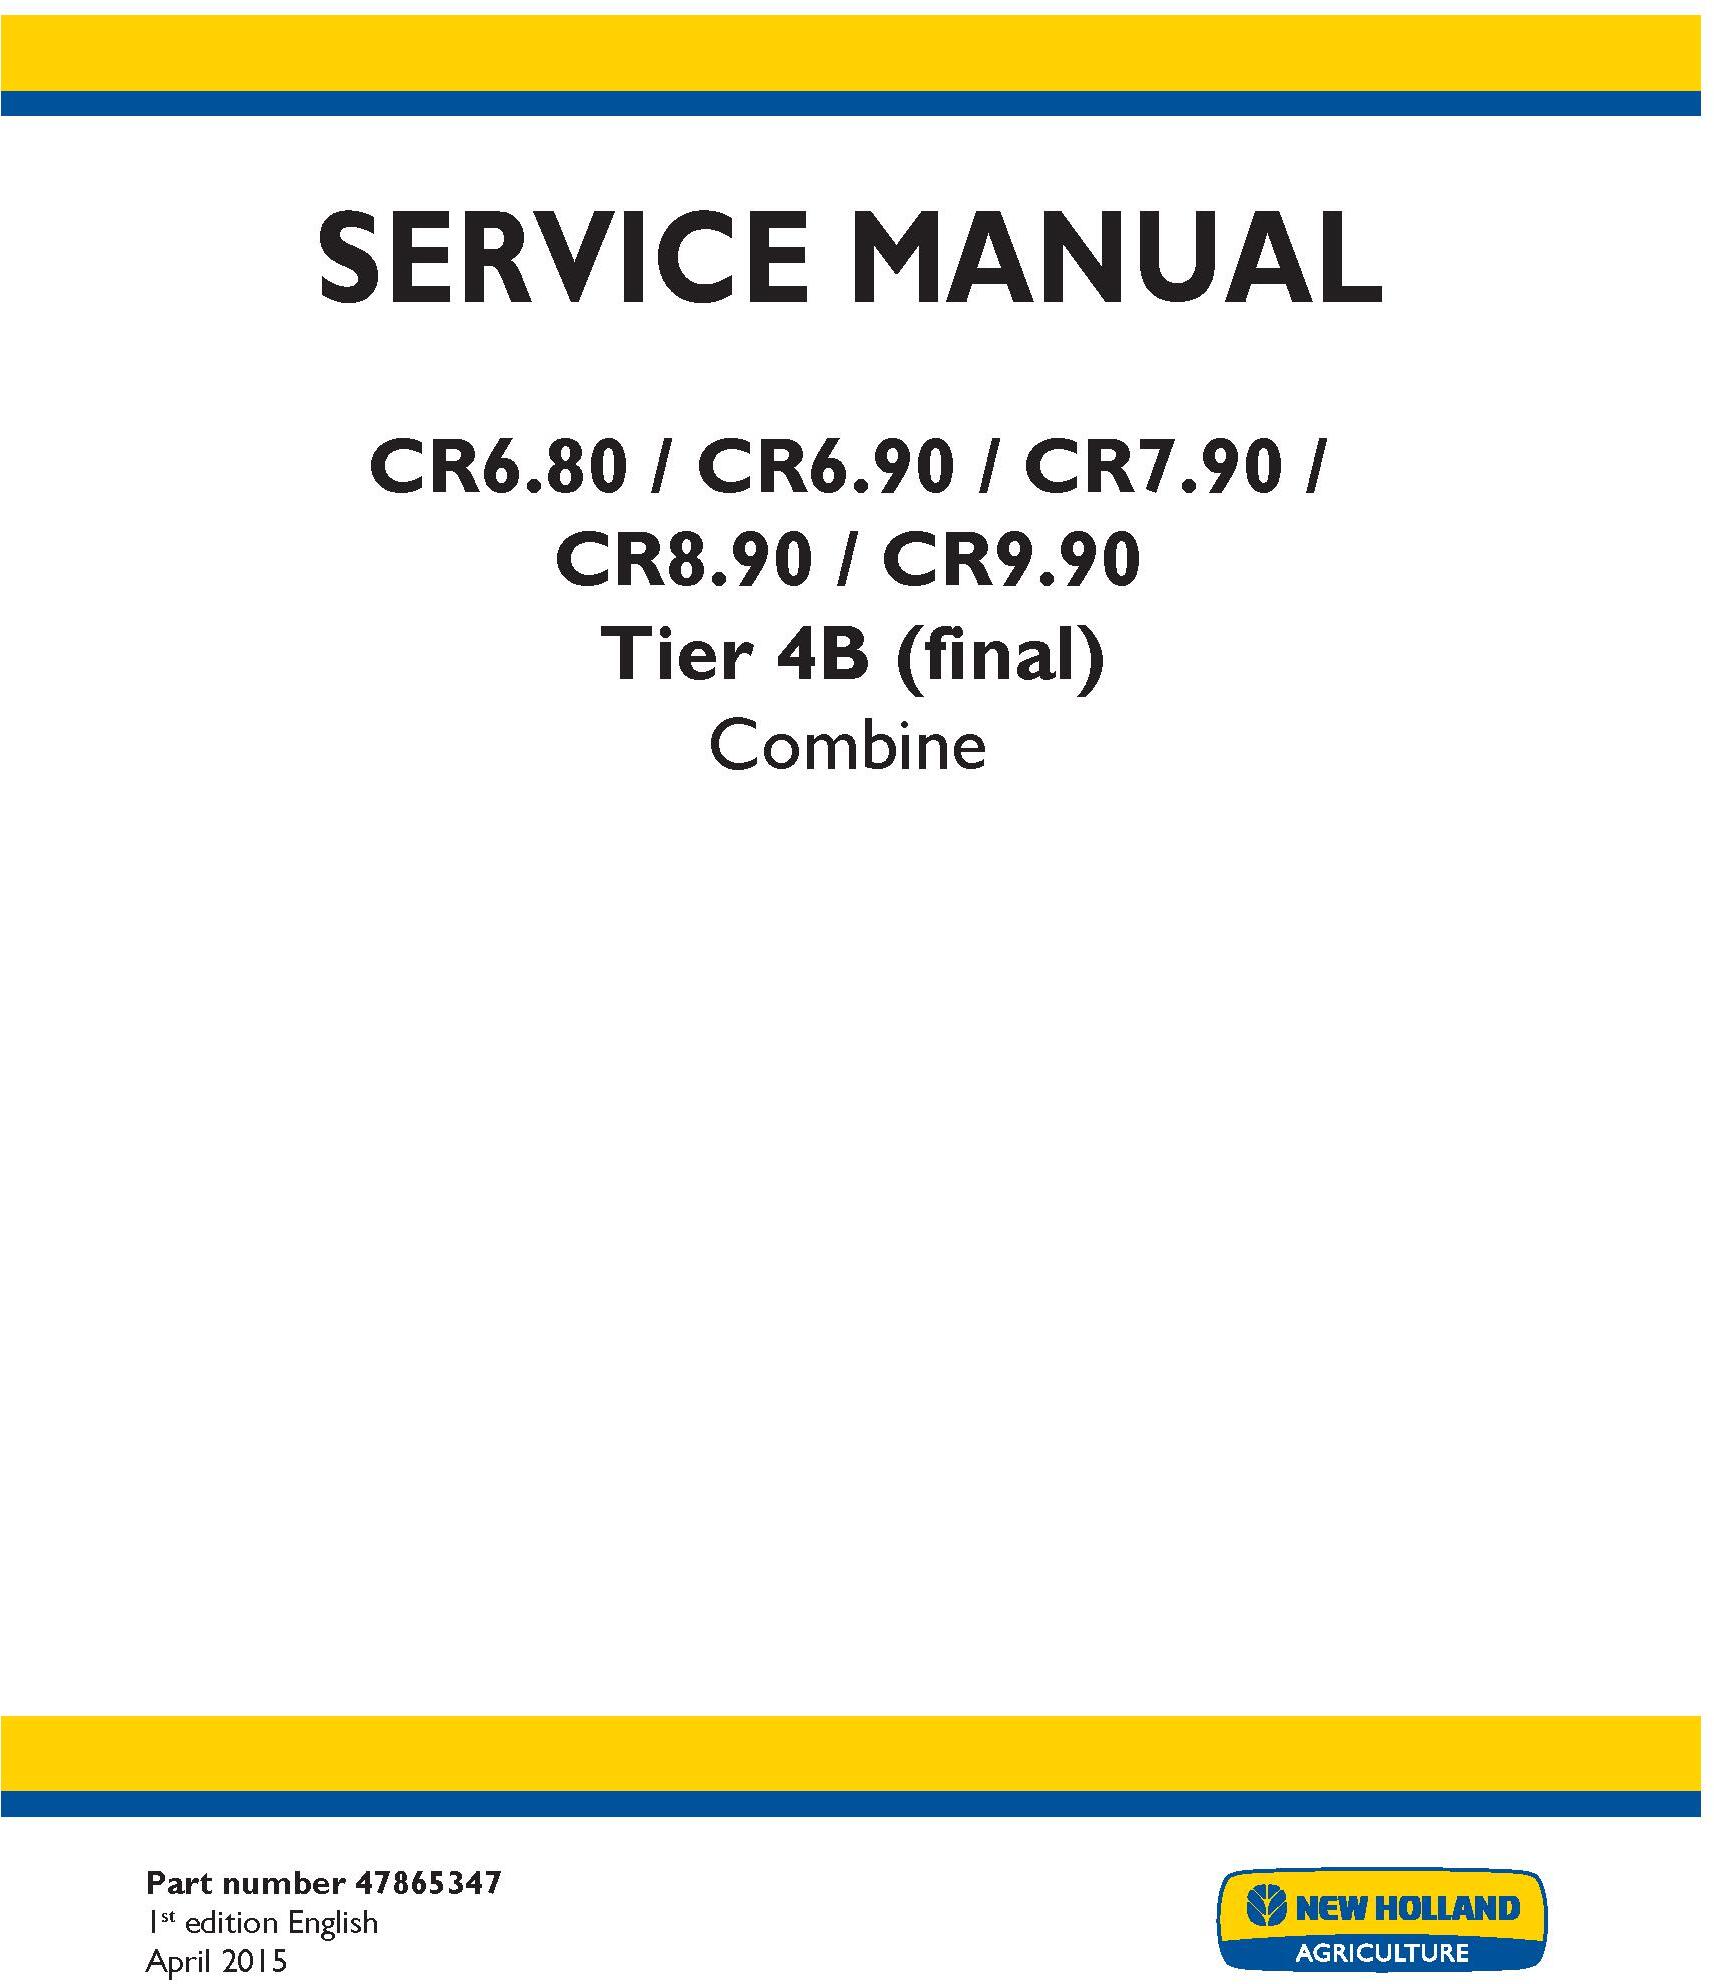 New Holland CR6.80, CR6.90, CR7.90, CR8.90, CR9.90 Combine Complete Service Manual (North America) - 19769